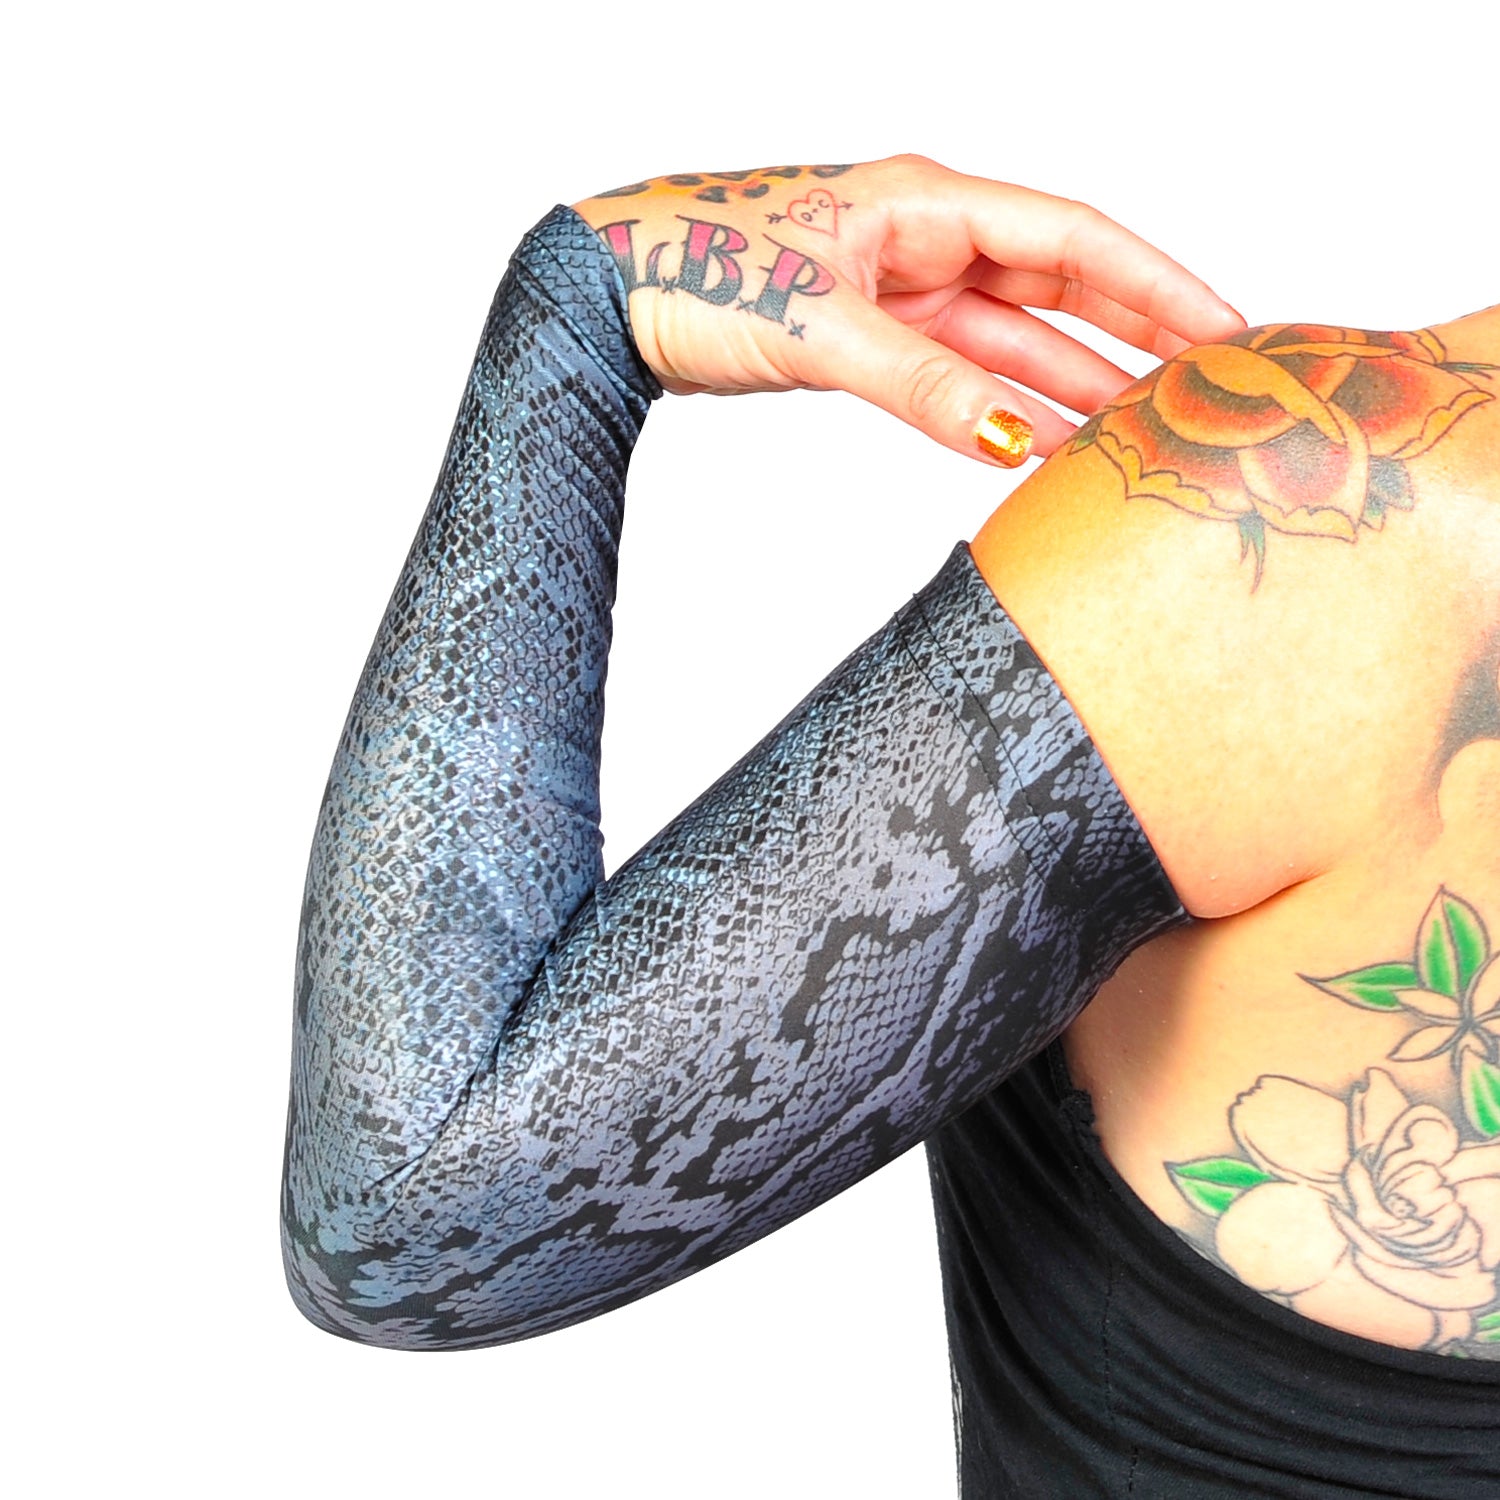 15+ Best Snake Half Sleeve Tattoo Designs | PetPress | Half sleeve tattoo, Snake  tattoo design, Forearm tattoo women